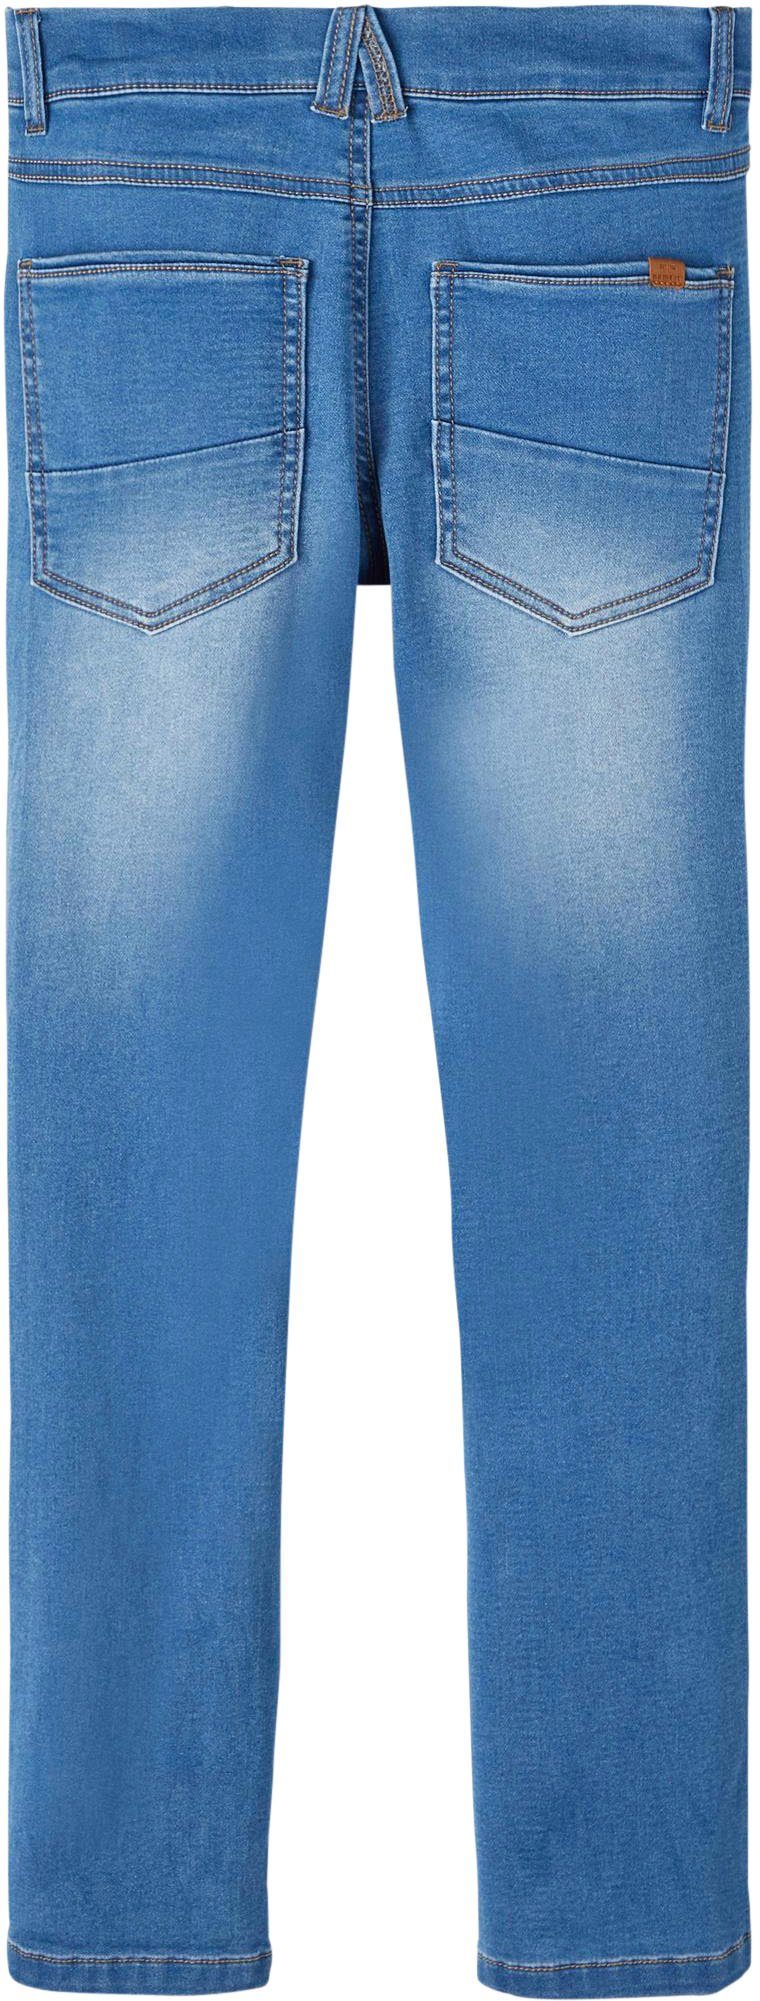 Stretch-Jeans NKMTHEO Name blue COR1 SWE medium DNMTHAYER It PANT denim